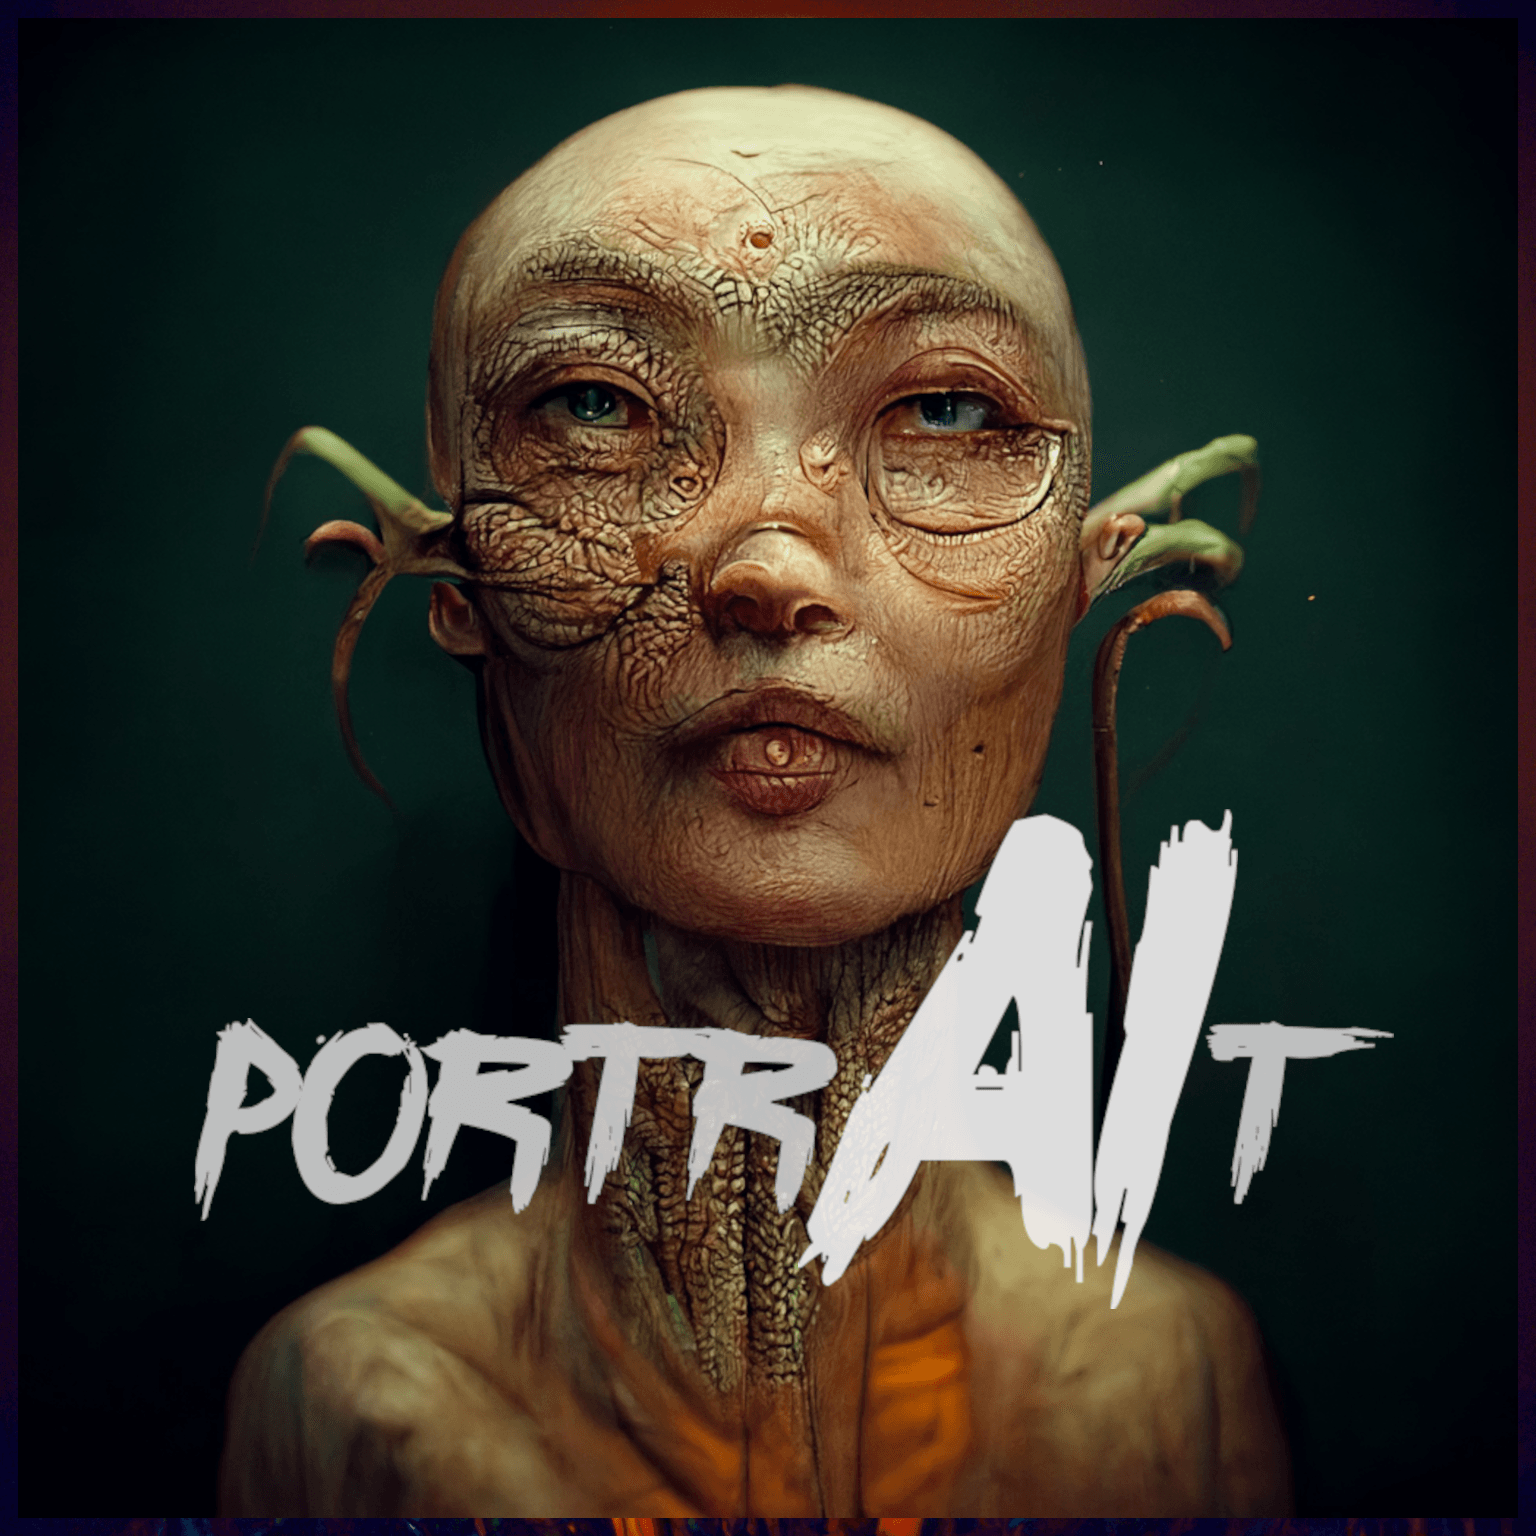 portr-AI-t